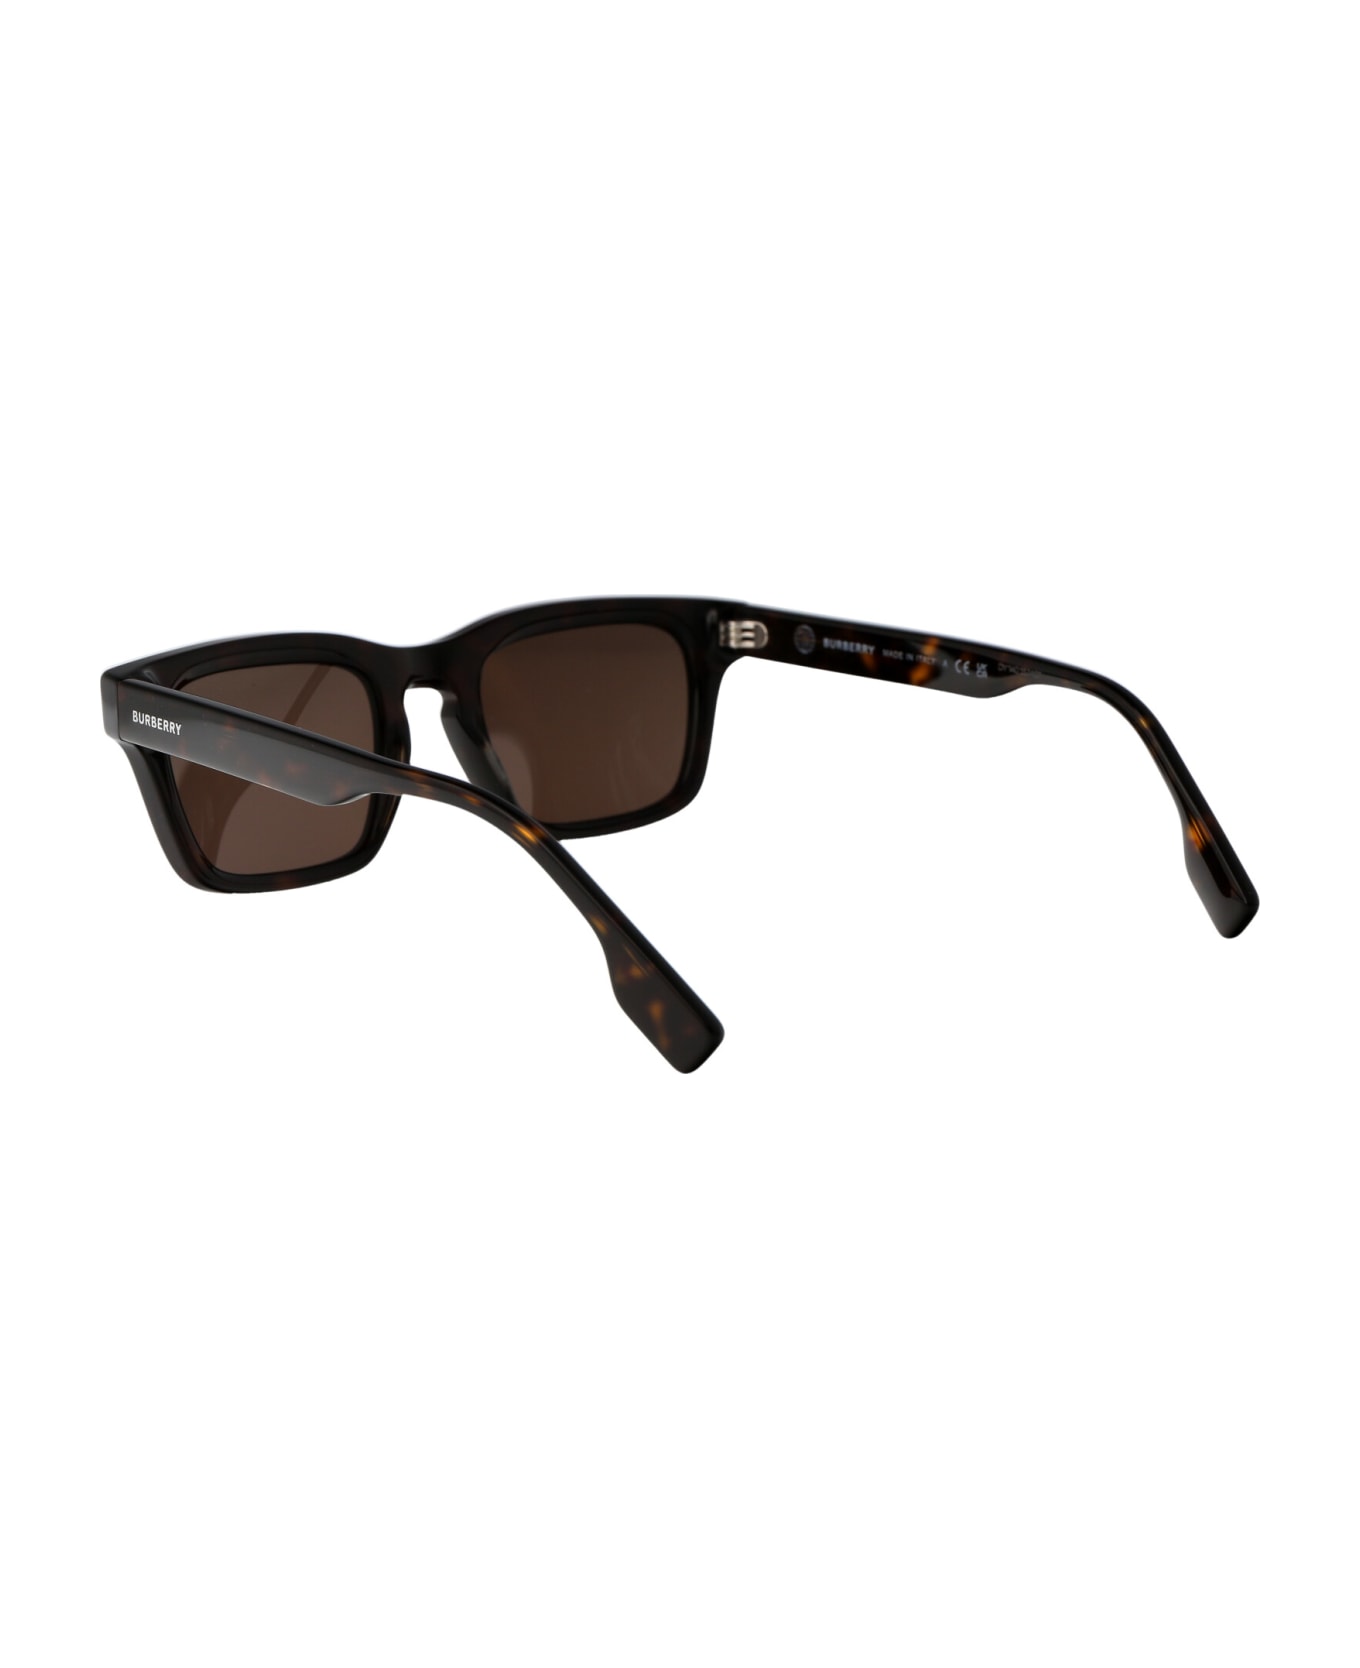 Burberry Eyewear 0be4403 Sunglasses - 300273 DARK HAVANA